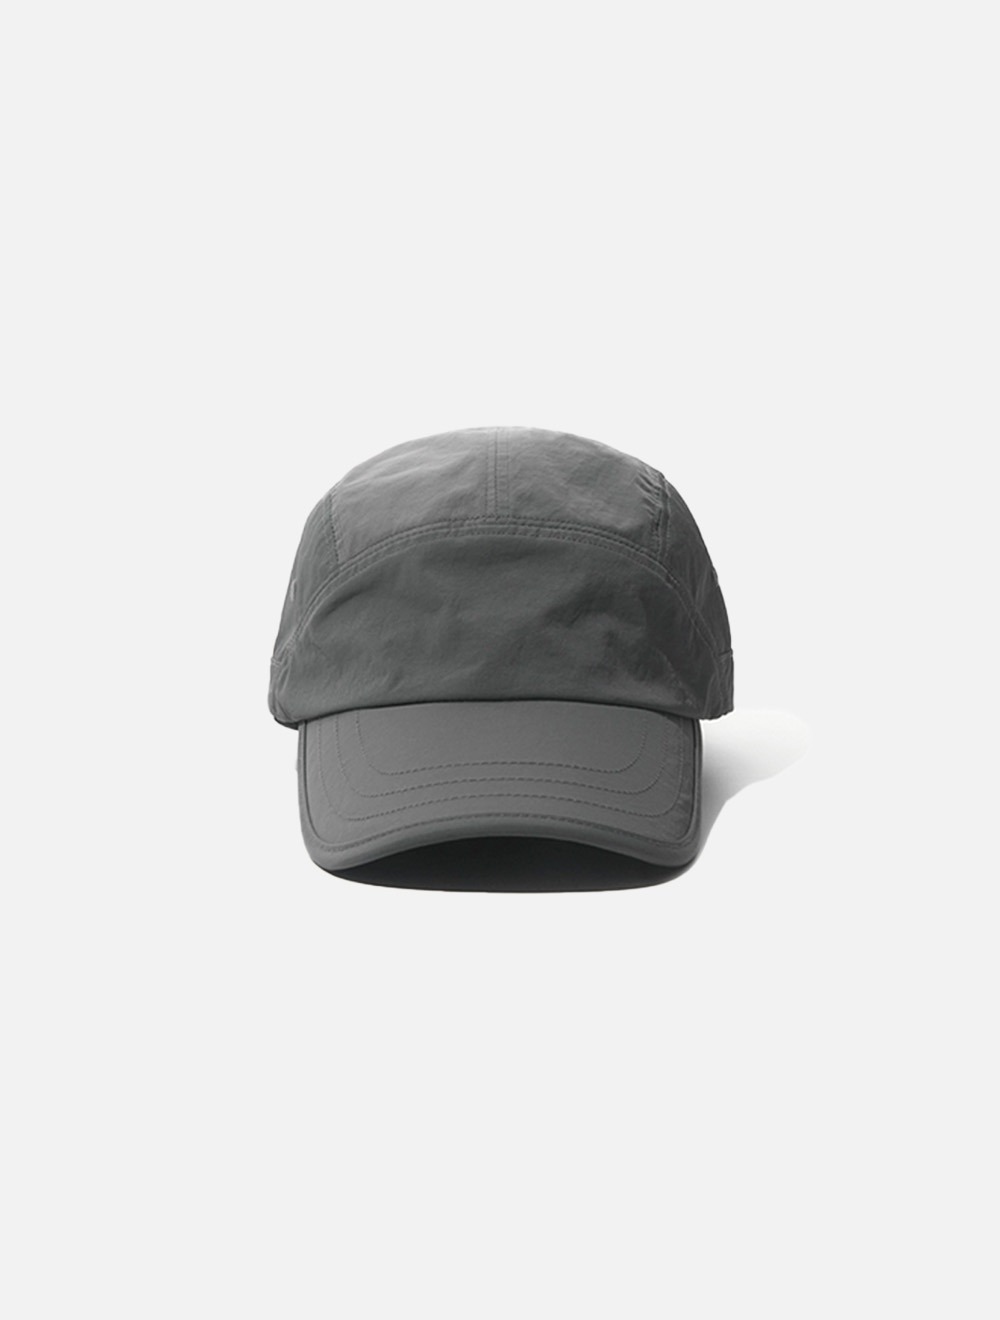 PLAYER CAP 2.0 (Gray)